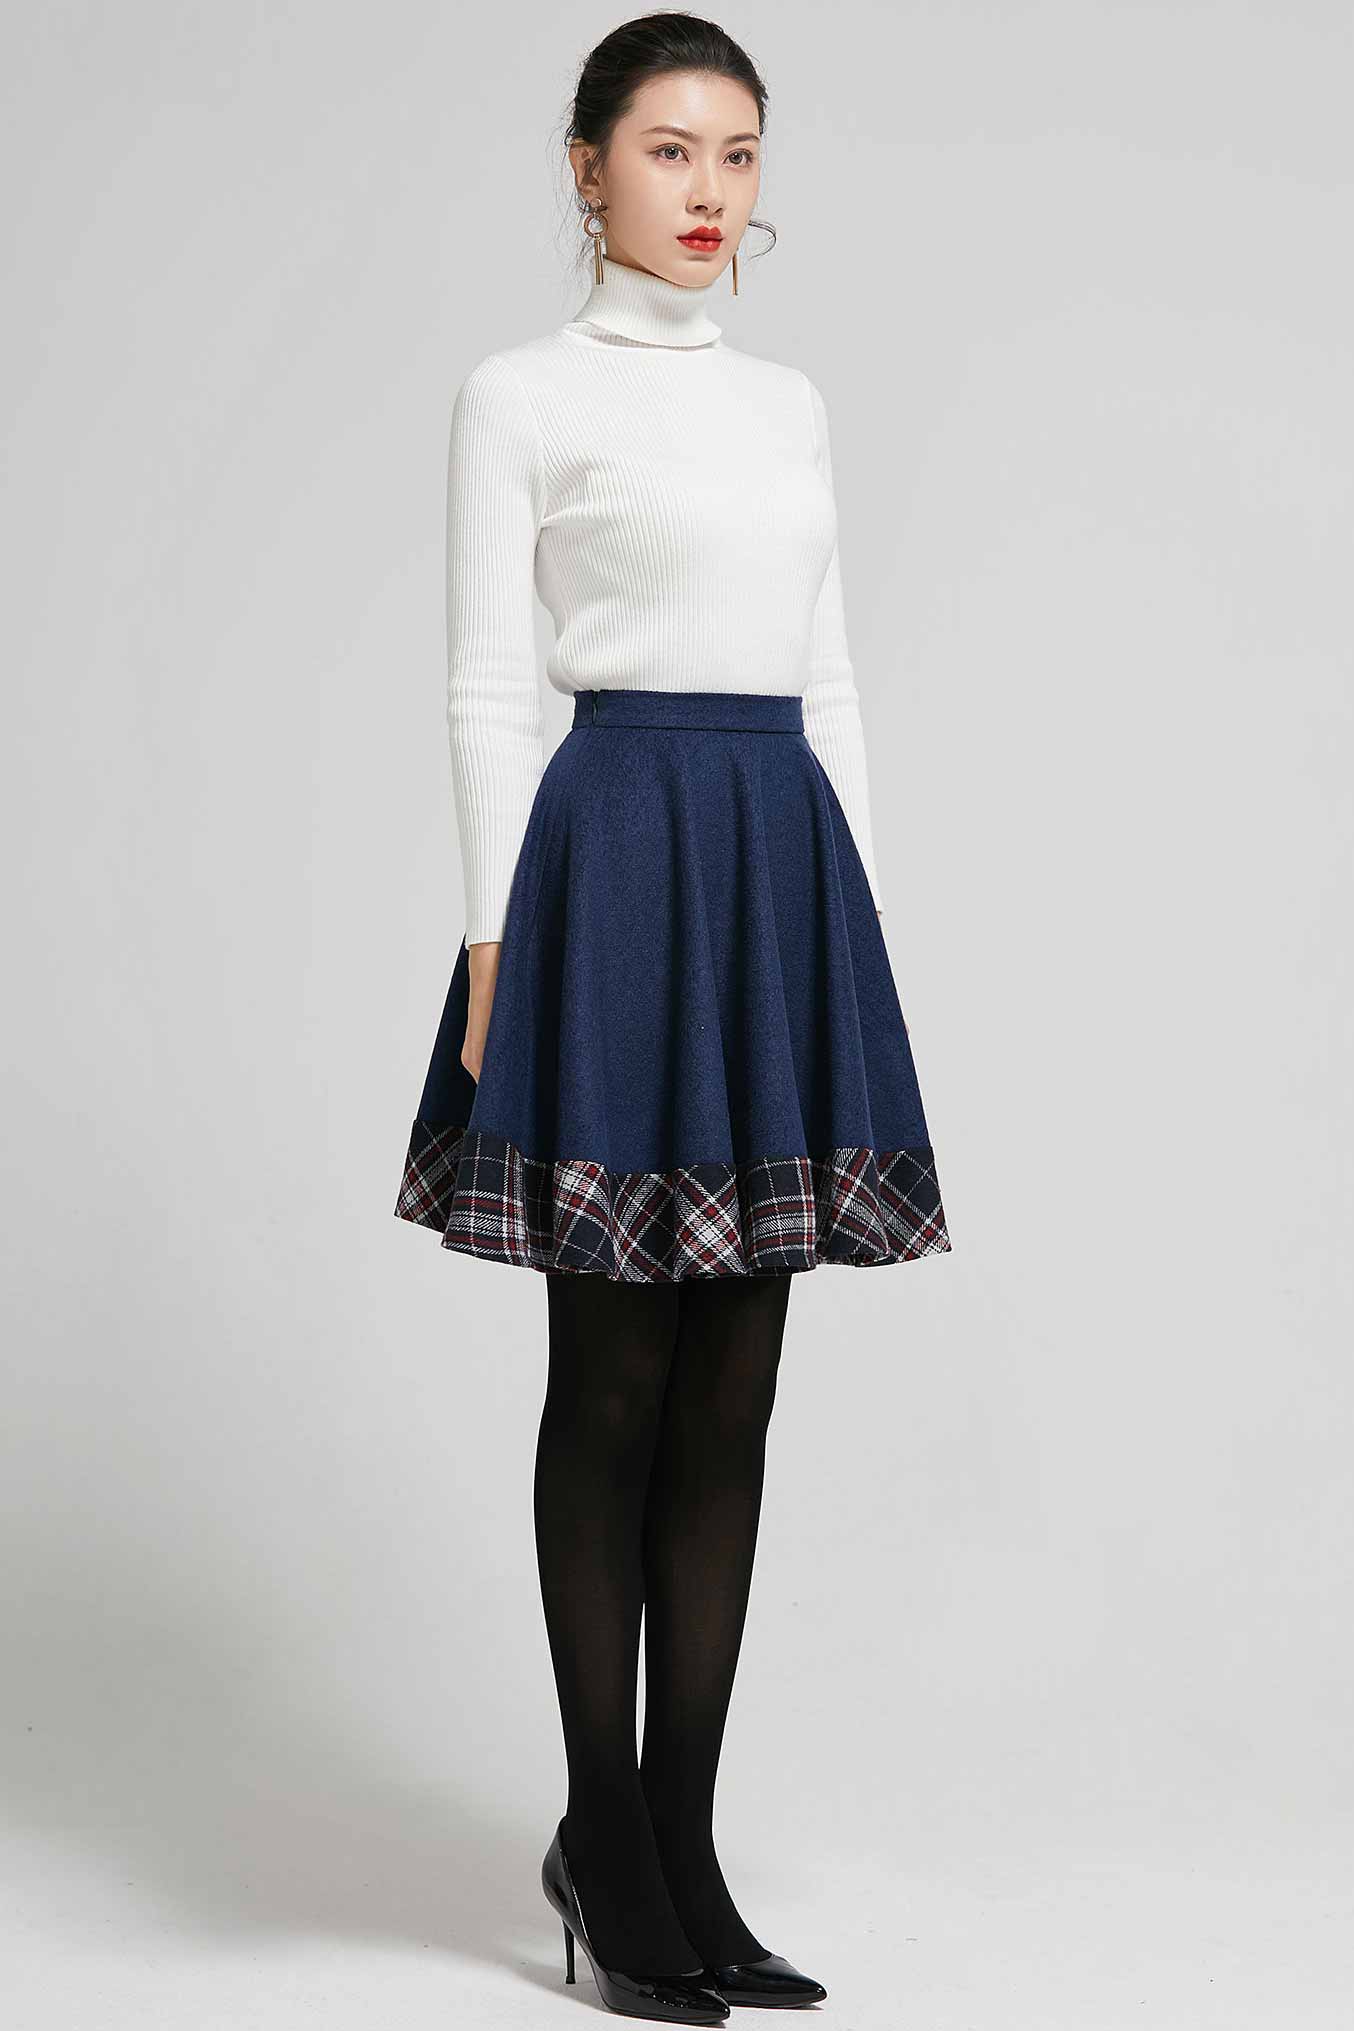 patch wool work – 2304# Blue mini skrit, flare XiaoLizi skater skirt